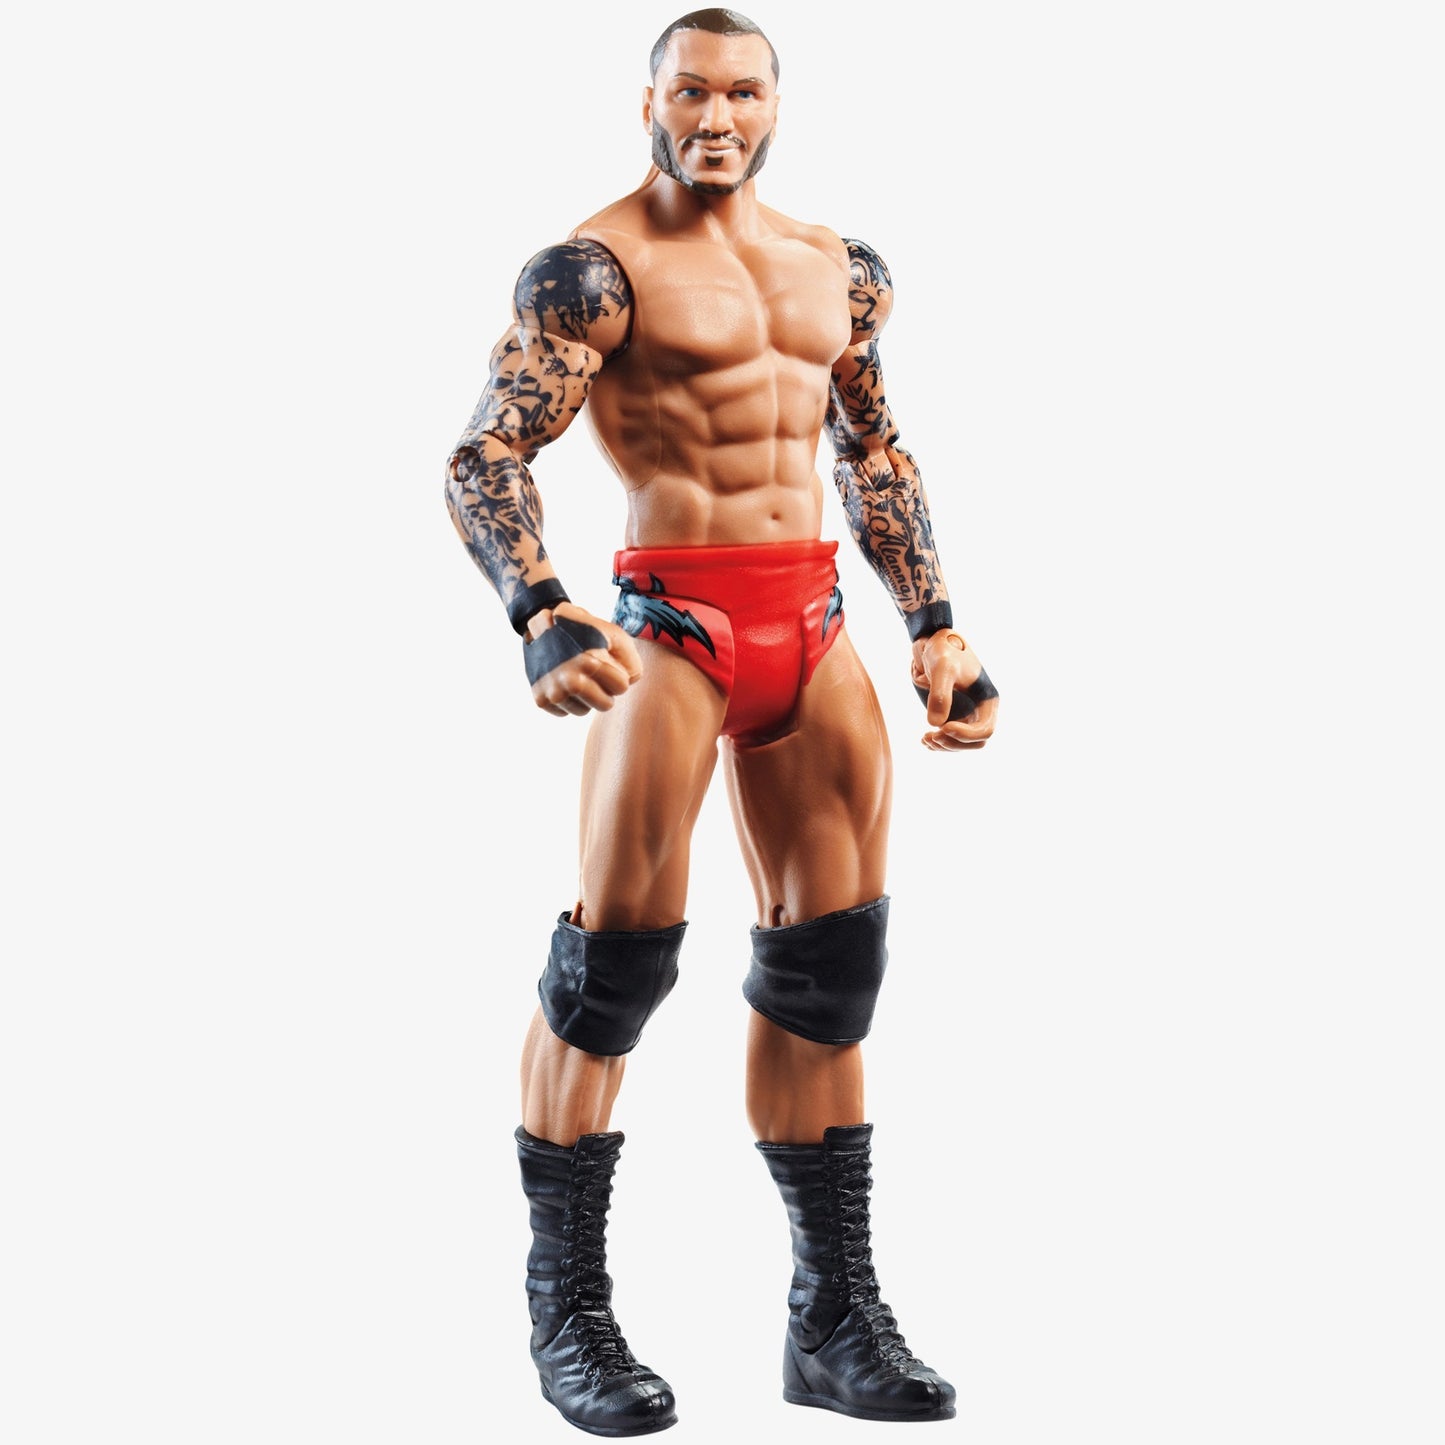 Randy Orton - WWE Basic Series #60